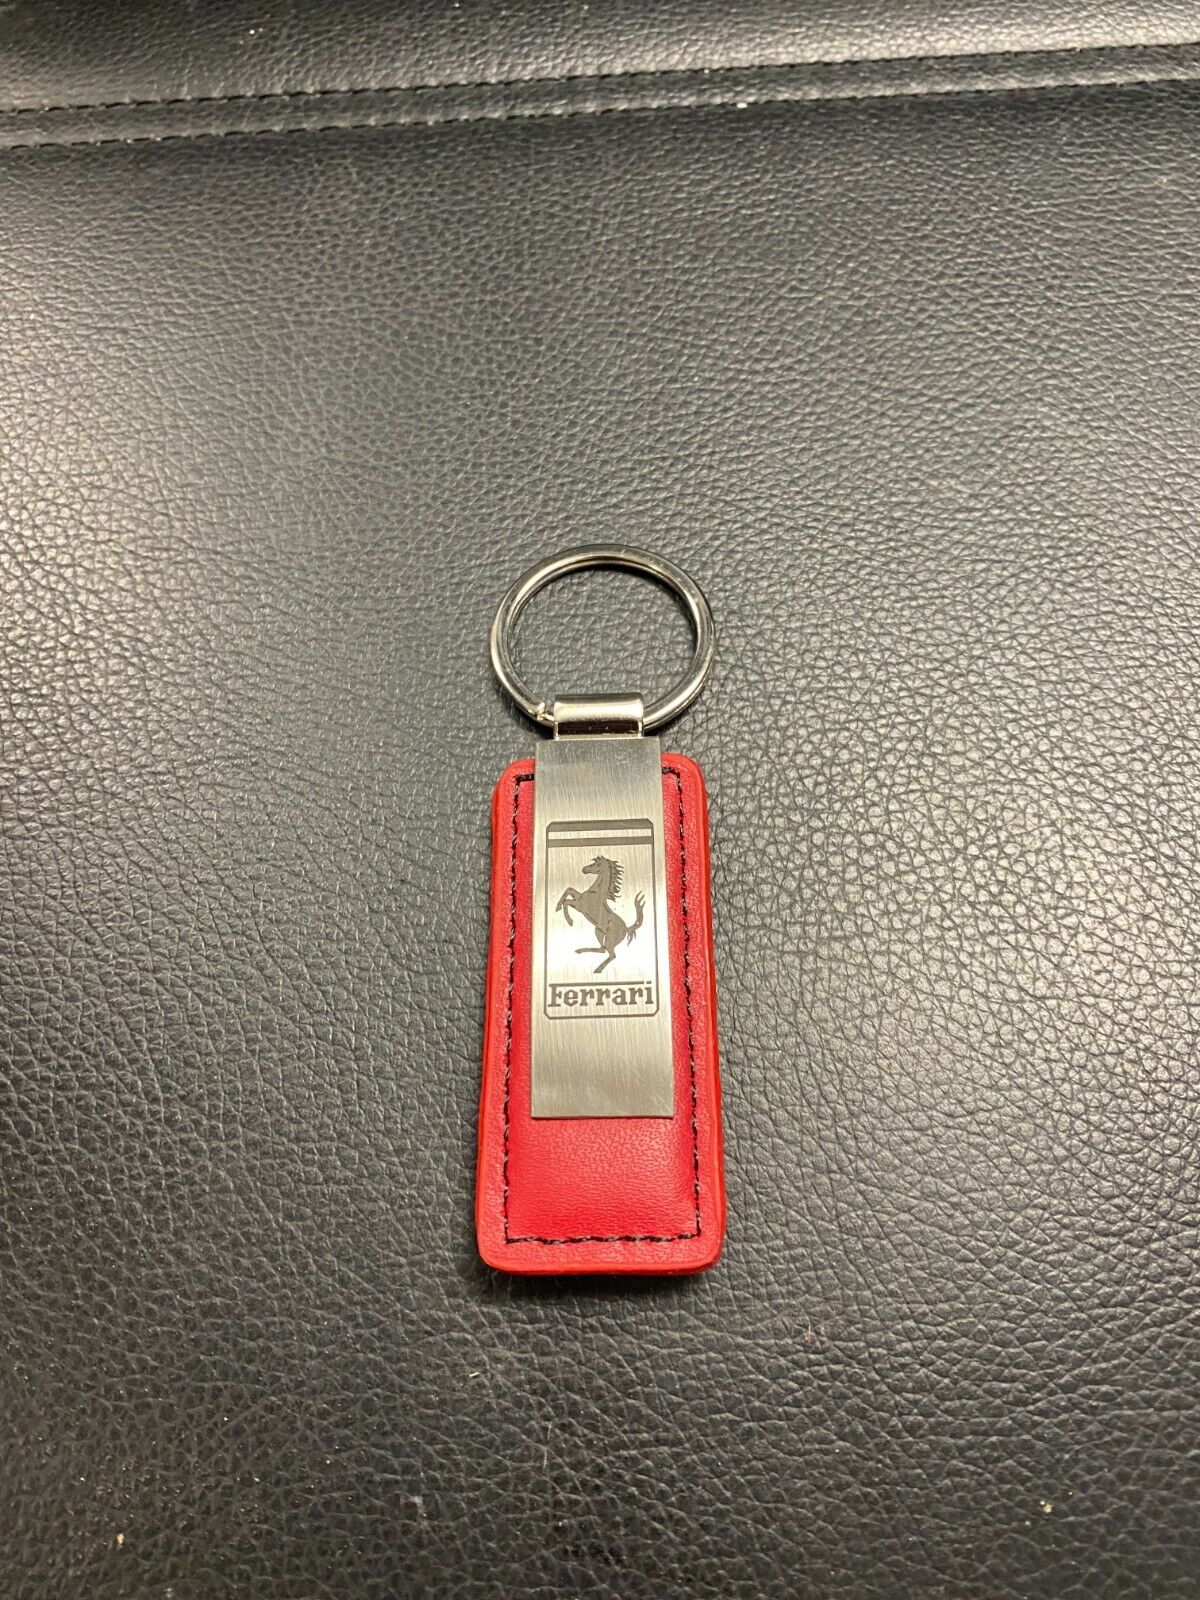 New Genuine Red Leather Ferrari Metal Key Ring - 